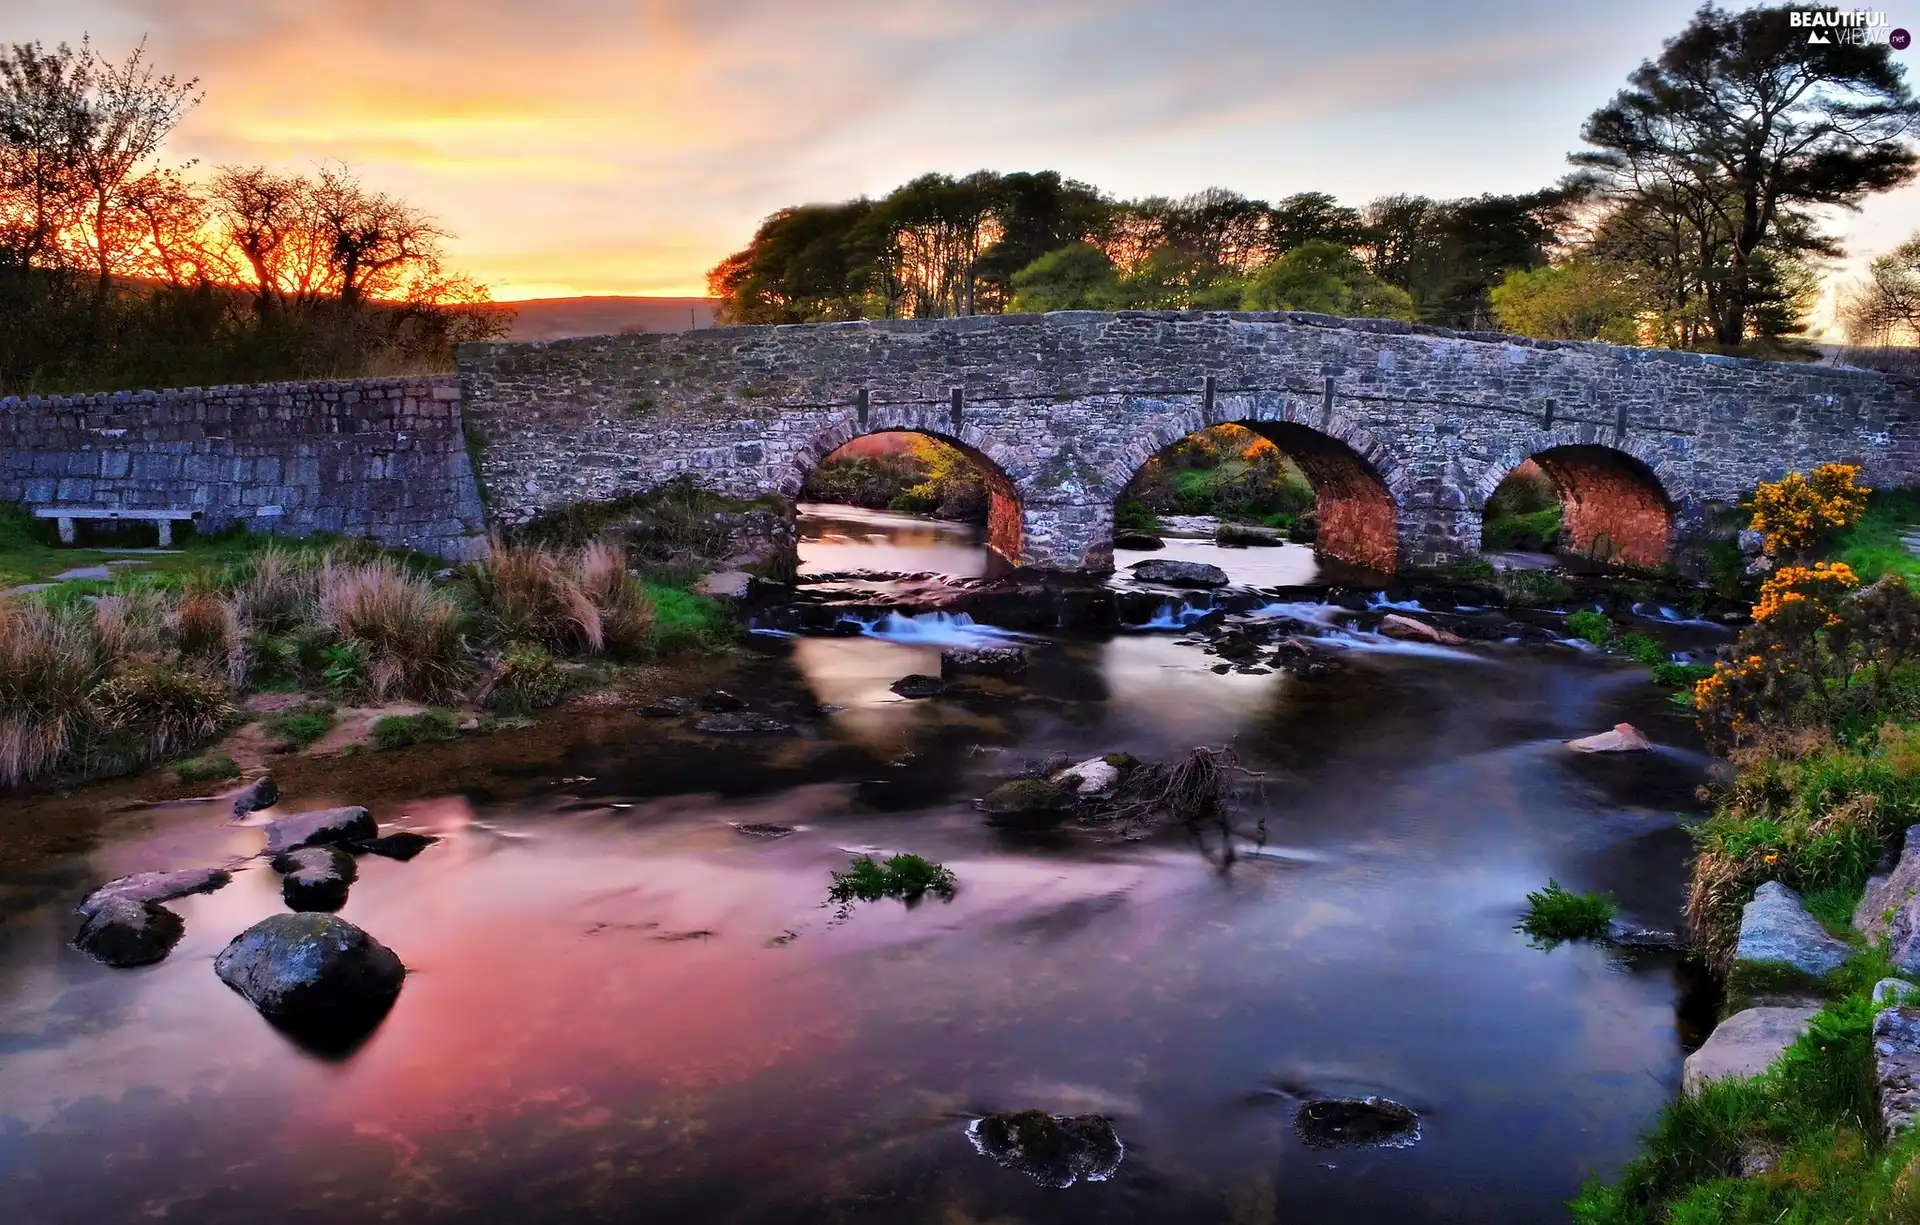 River, bridge, Stones, Great Sunsets